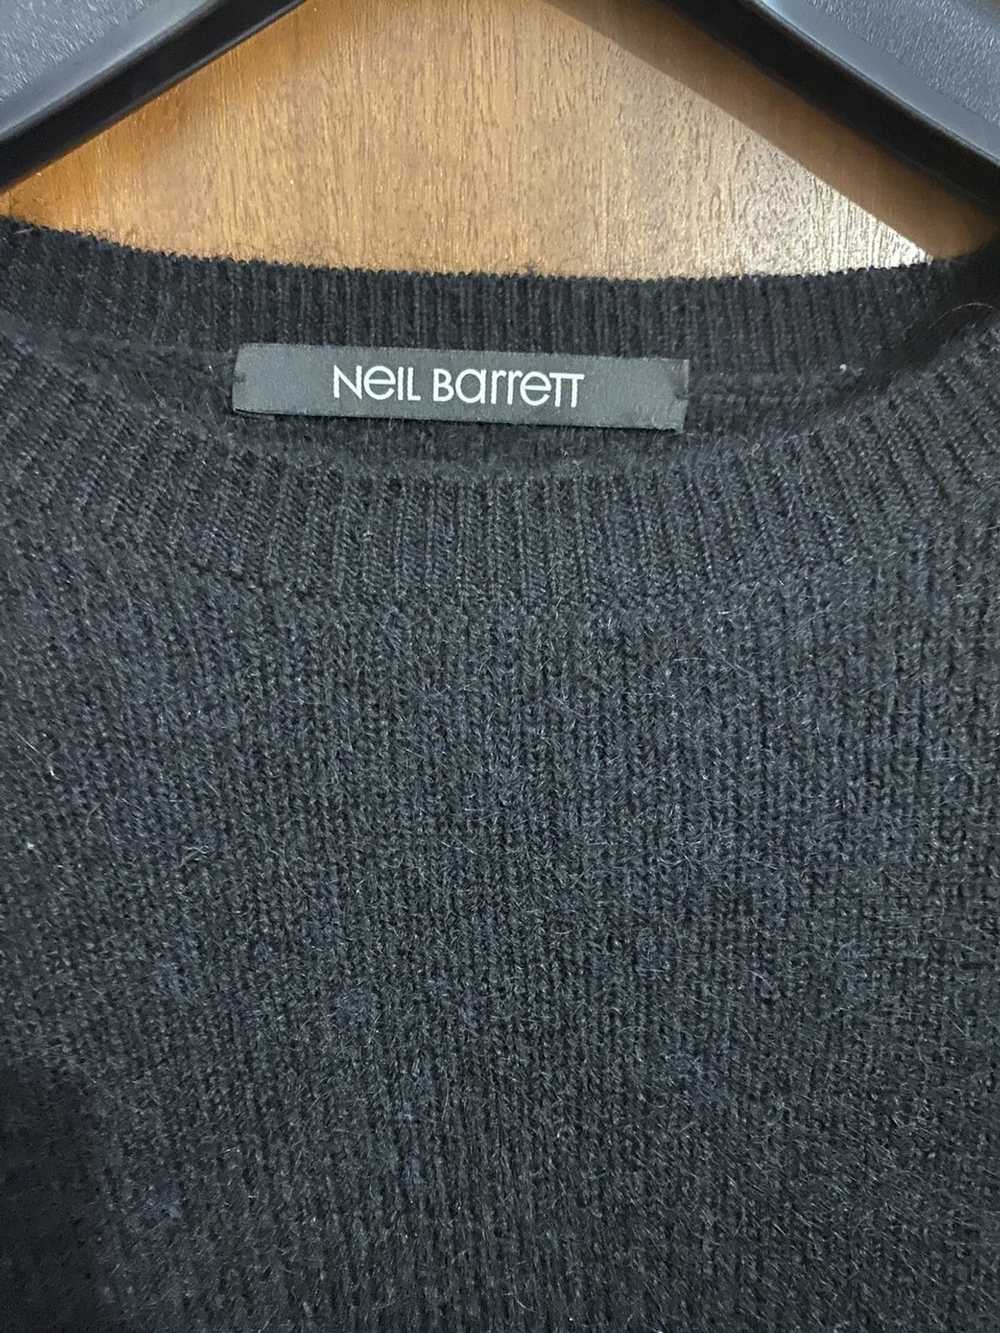 Neil Barrett Neil Barrett geometrical sweater - image 3